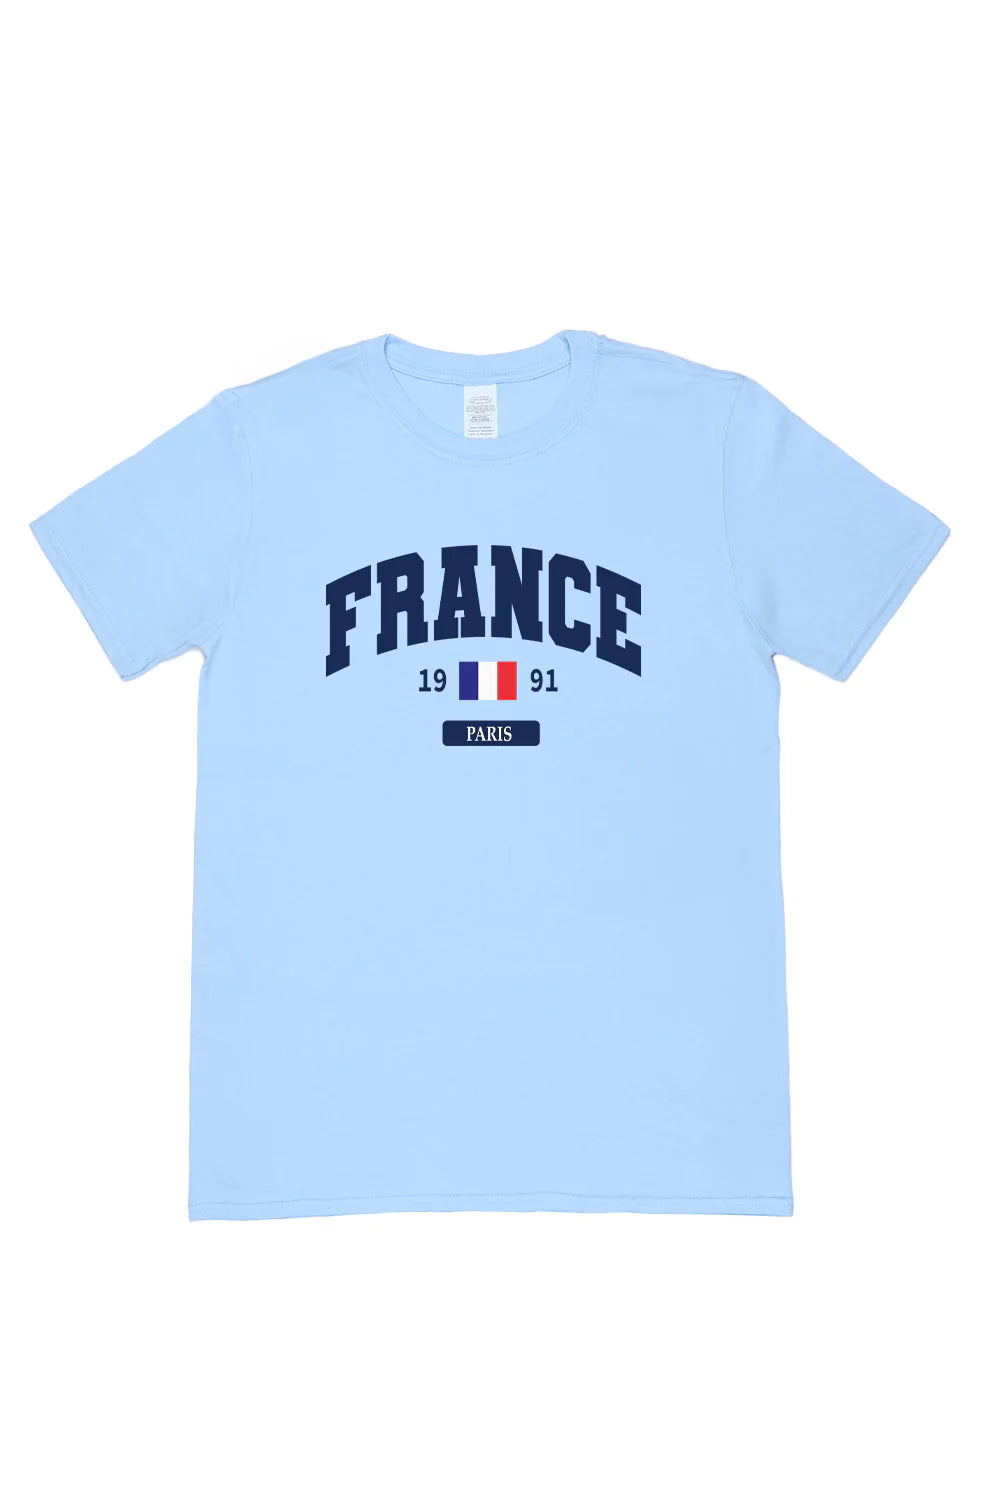 France Paris Printed T-Shirt